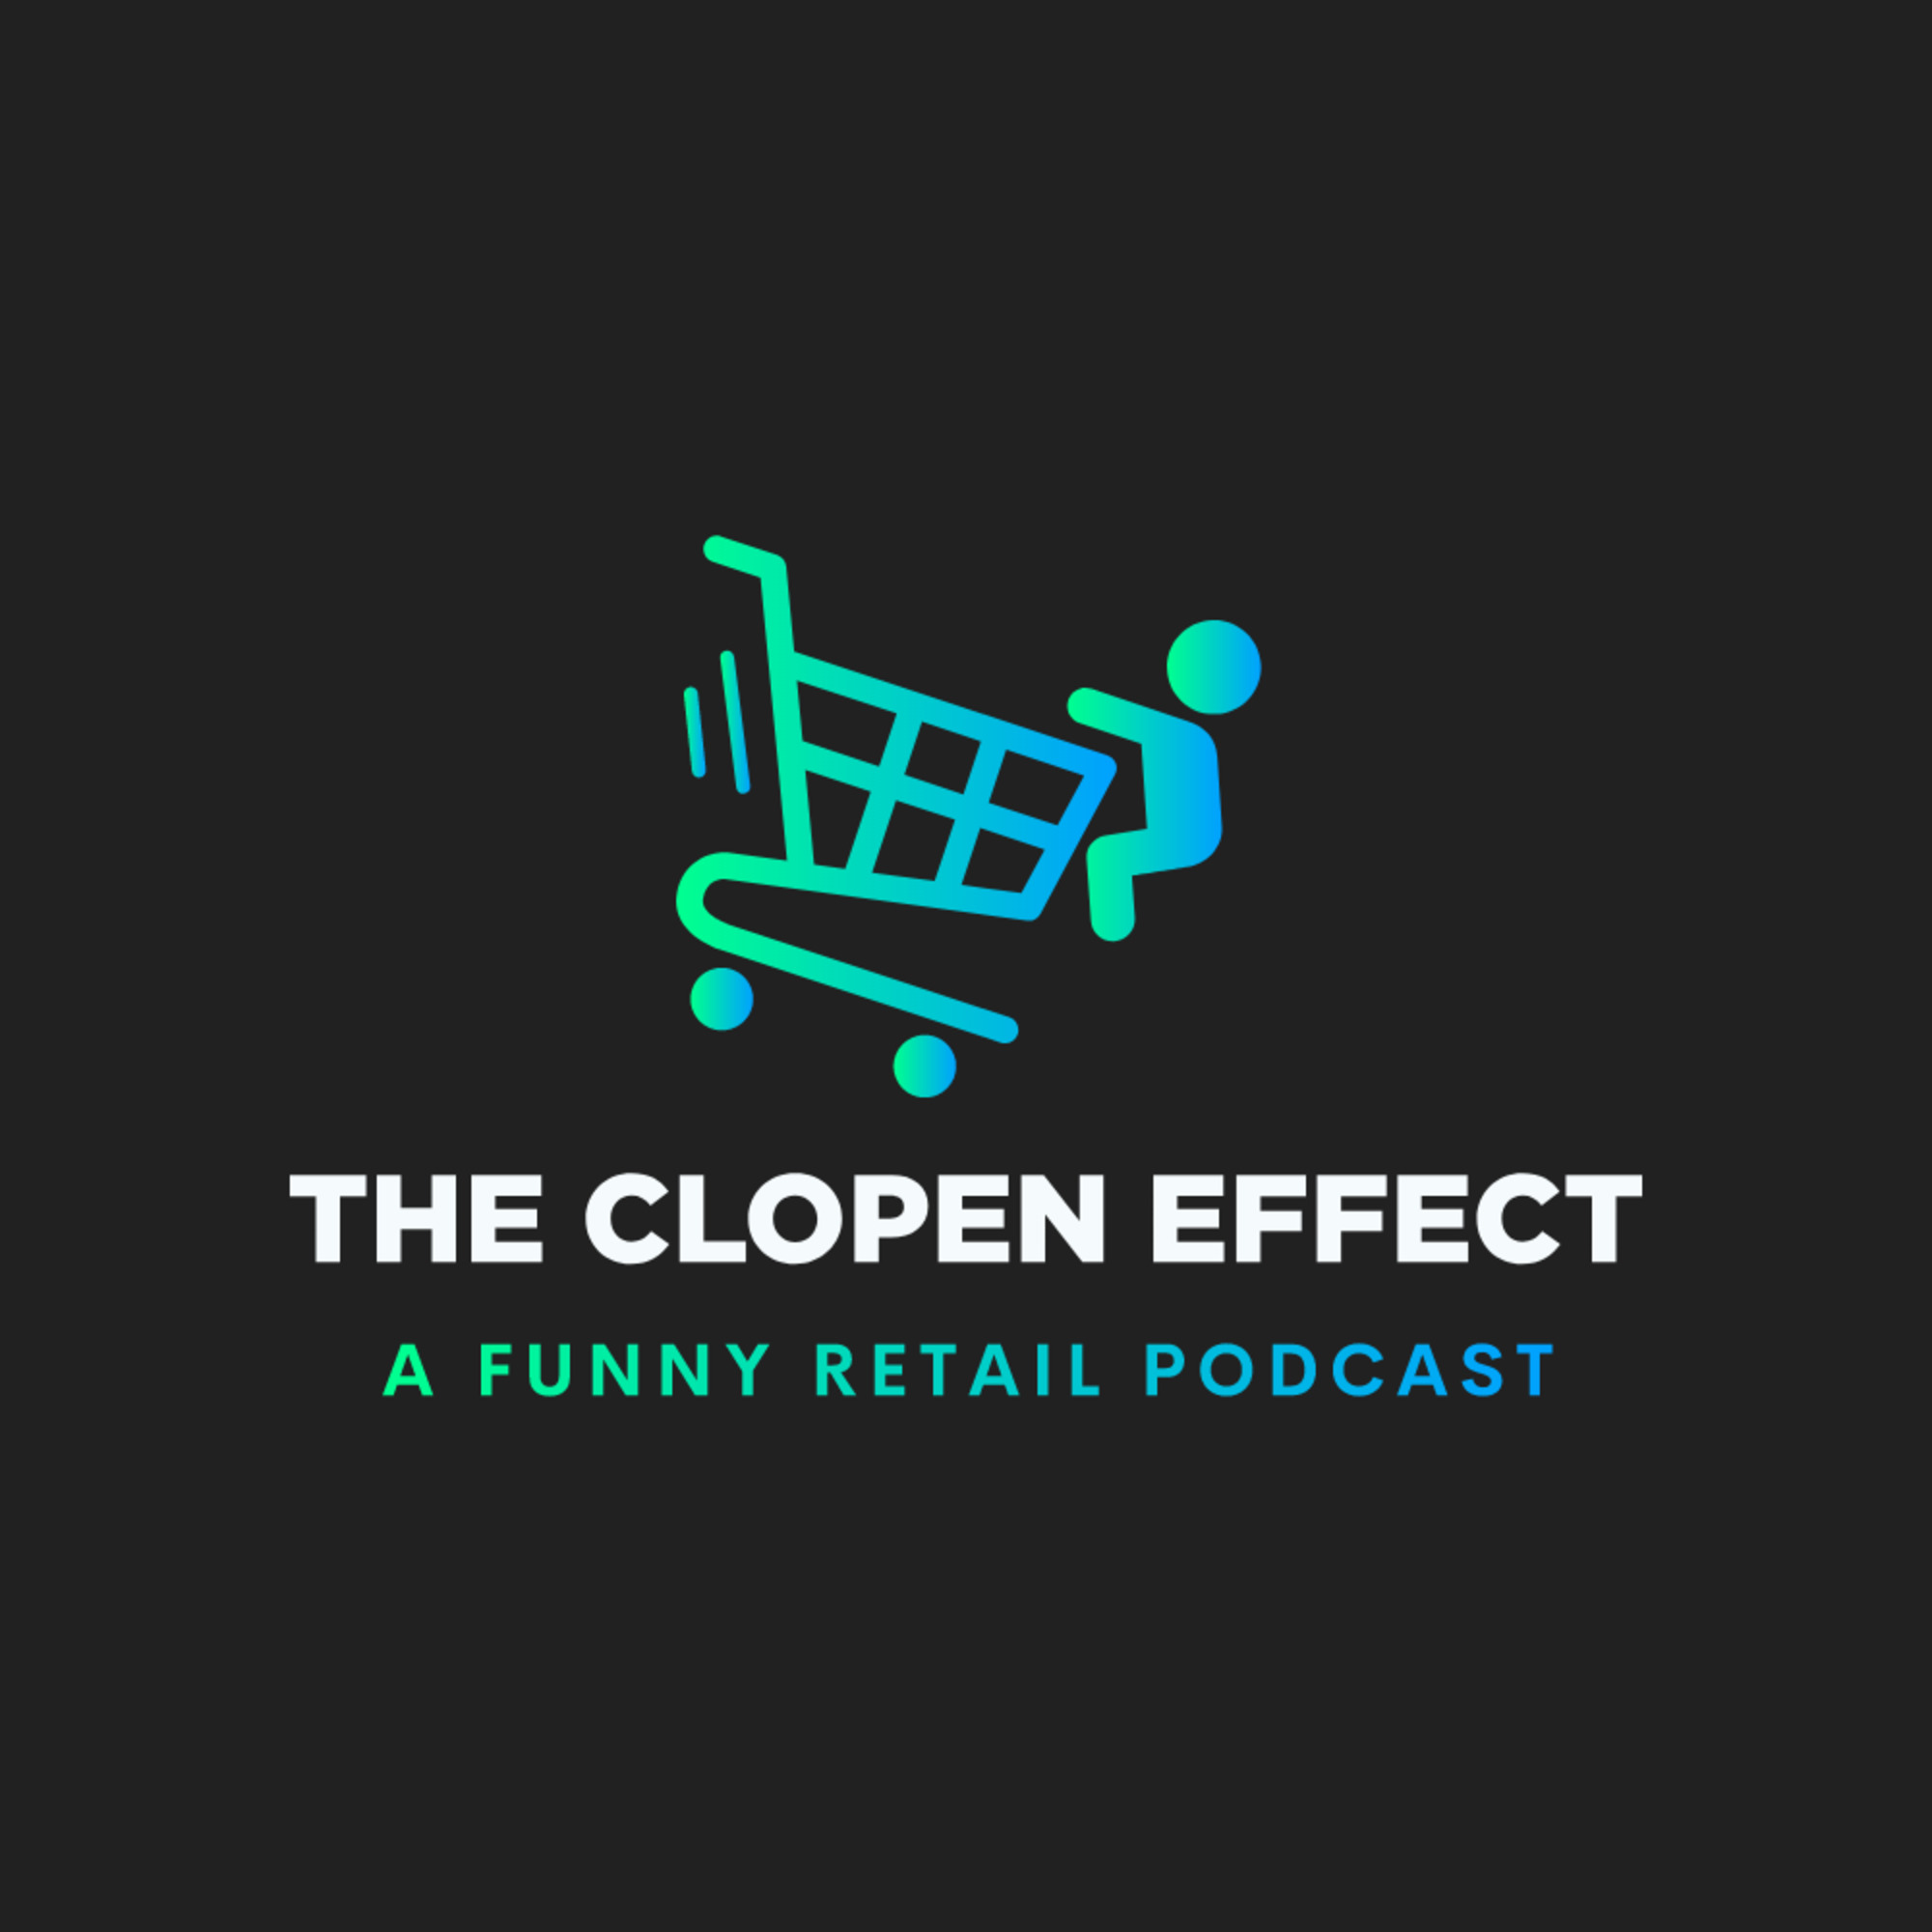 Artwork for podcast The Clopen Effect